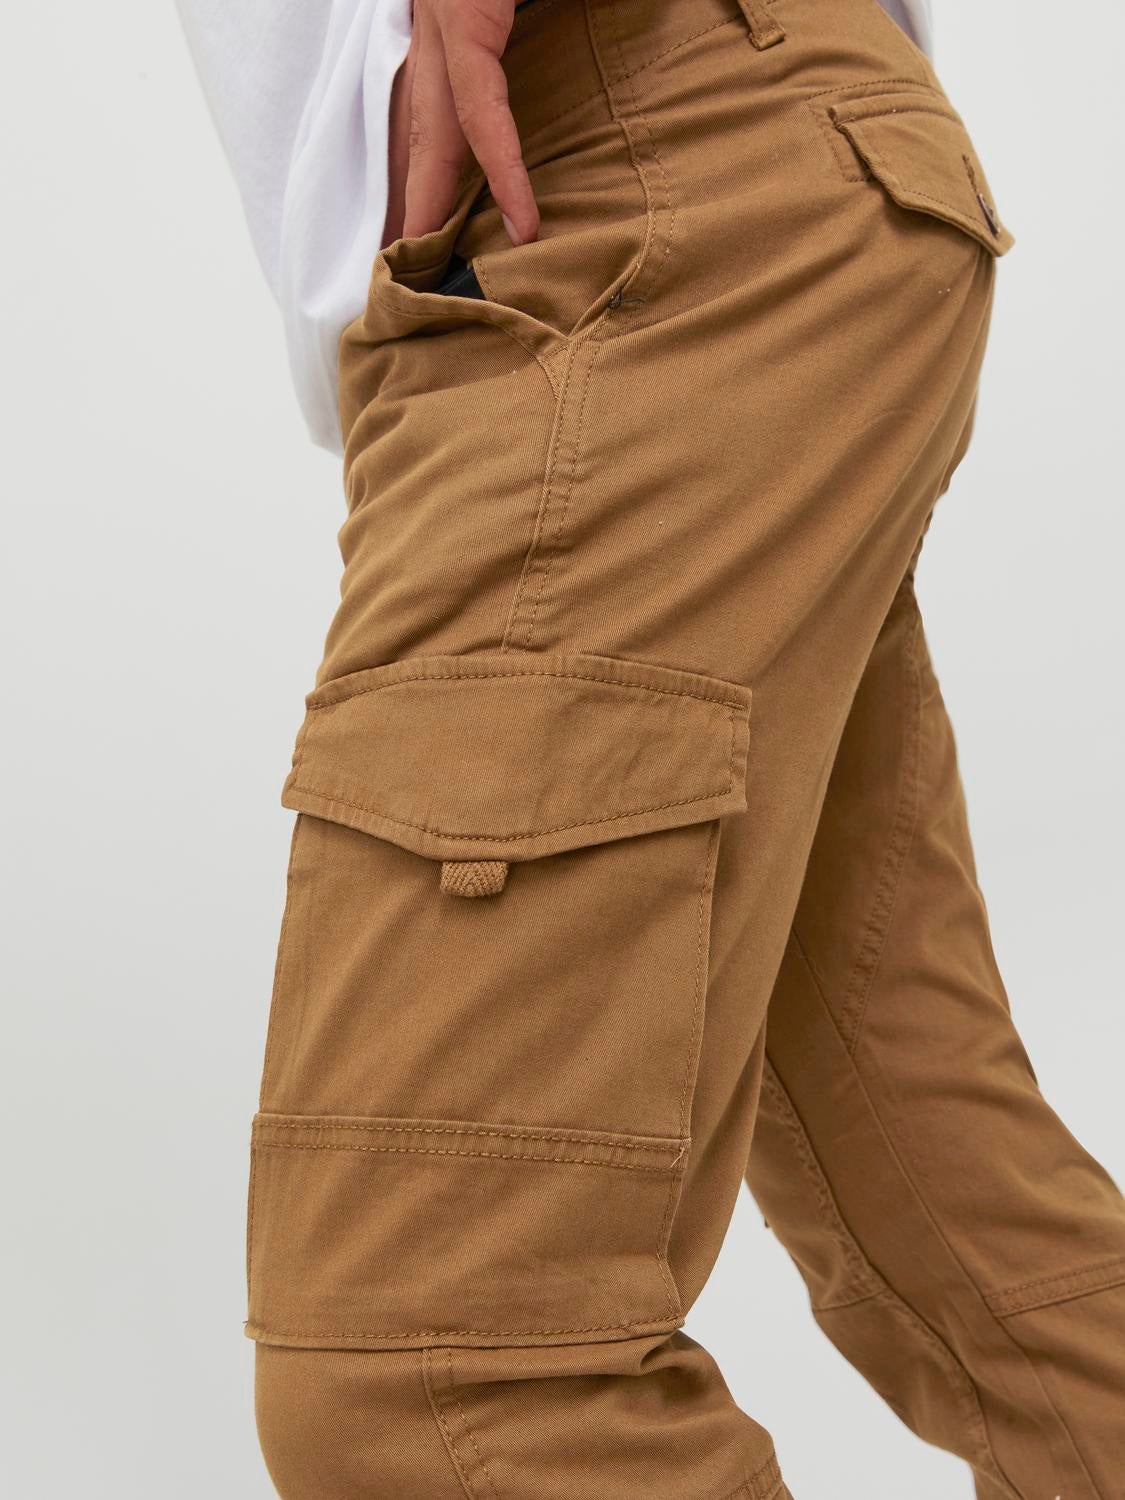 Homenesgenics Khaki Pants for Men Men Solid Patchwork Casual Multiple  Pockets Outdoor Straight Type Fitness Pants Cargo Pants Trousers Clearance  - Walmart.com